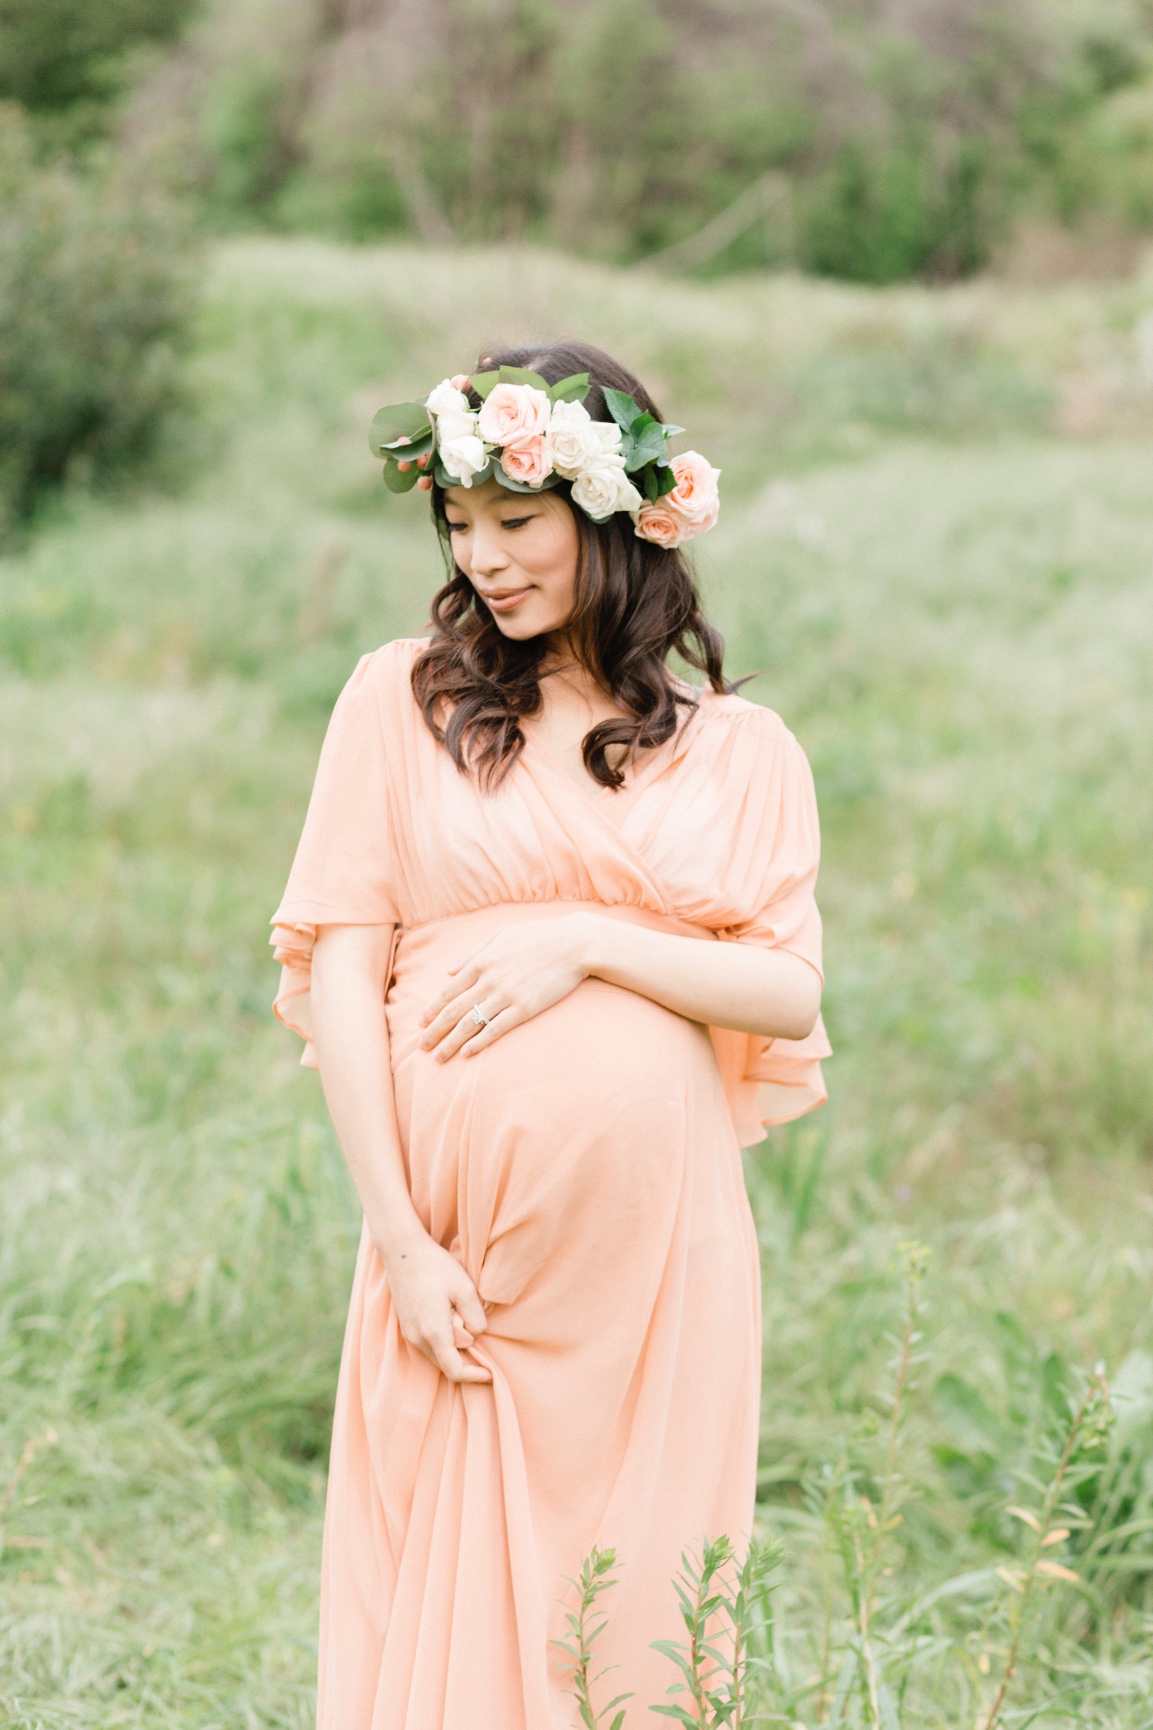 Outdoor Maternity Photography in Santa Monica - Newborn Photography Los ...